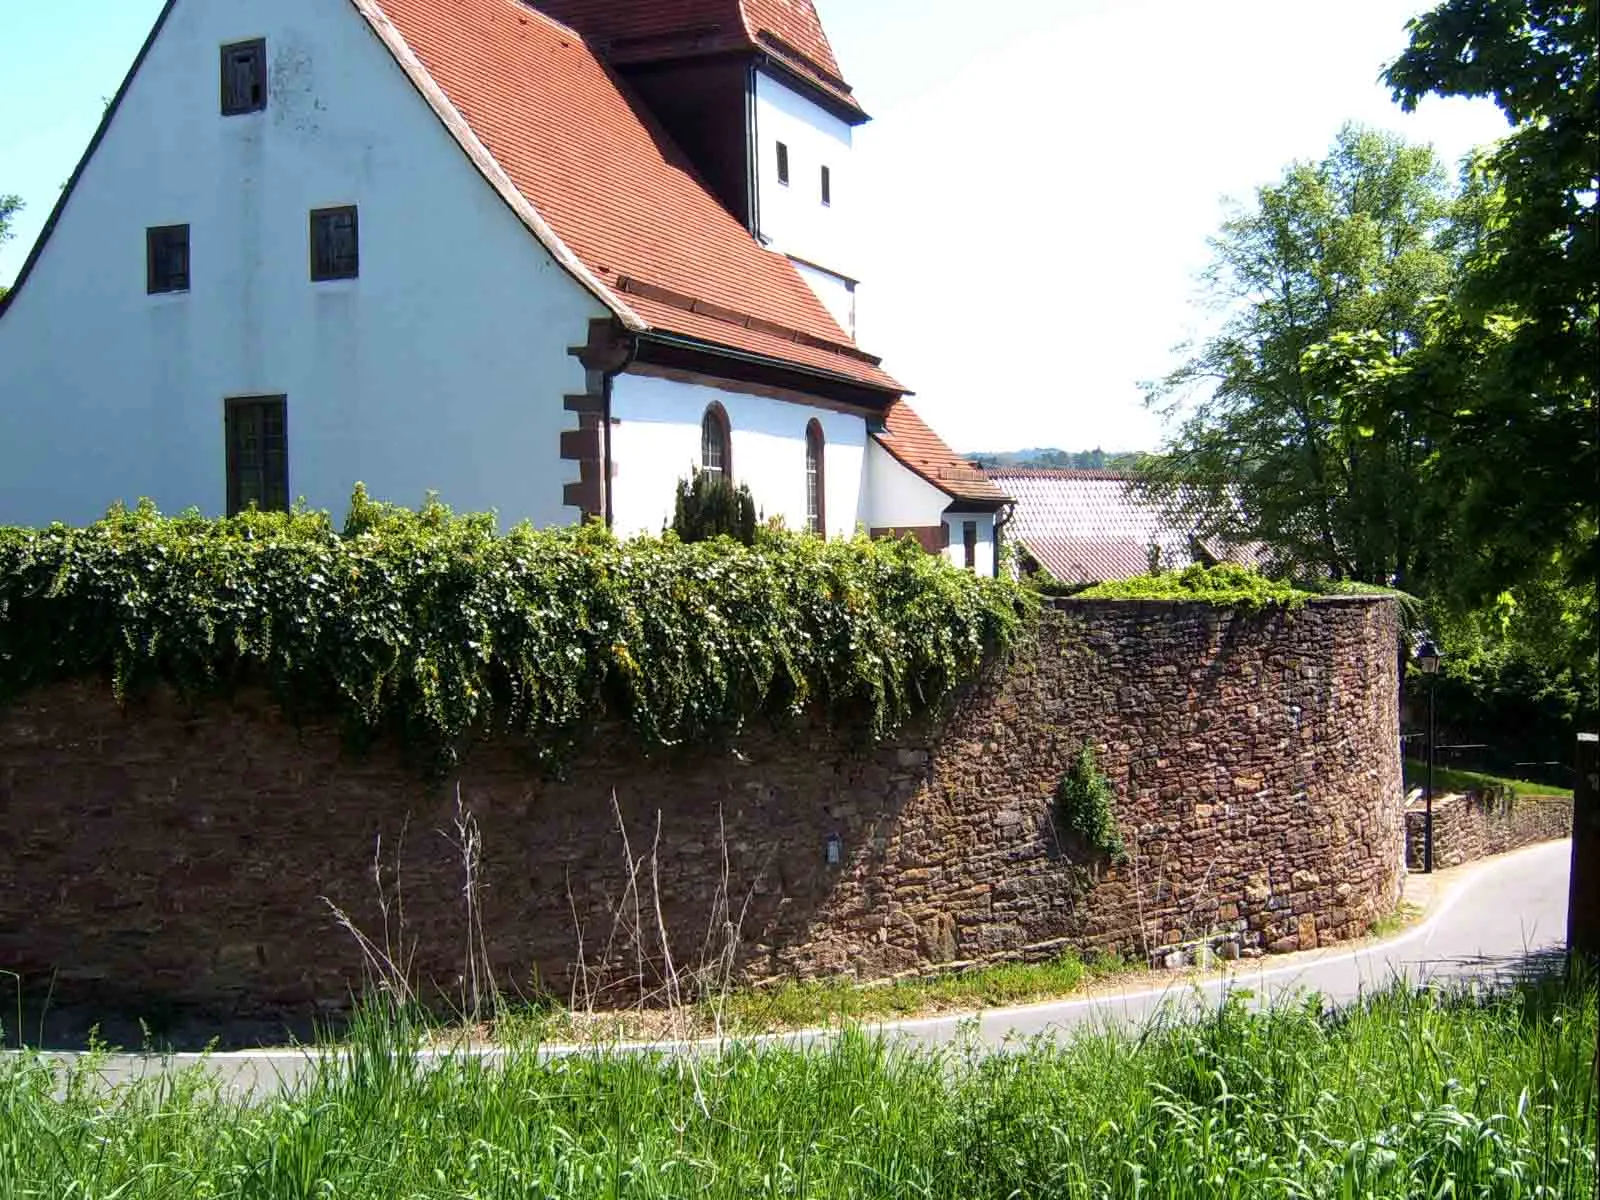 Photo showing: Hausen an der Würm (Church-Castle); District of Böblingen; Federal State of Baden-Württemberg; Germany